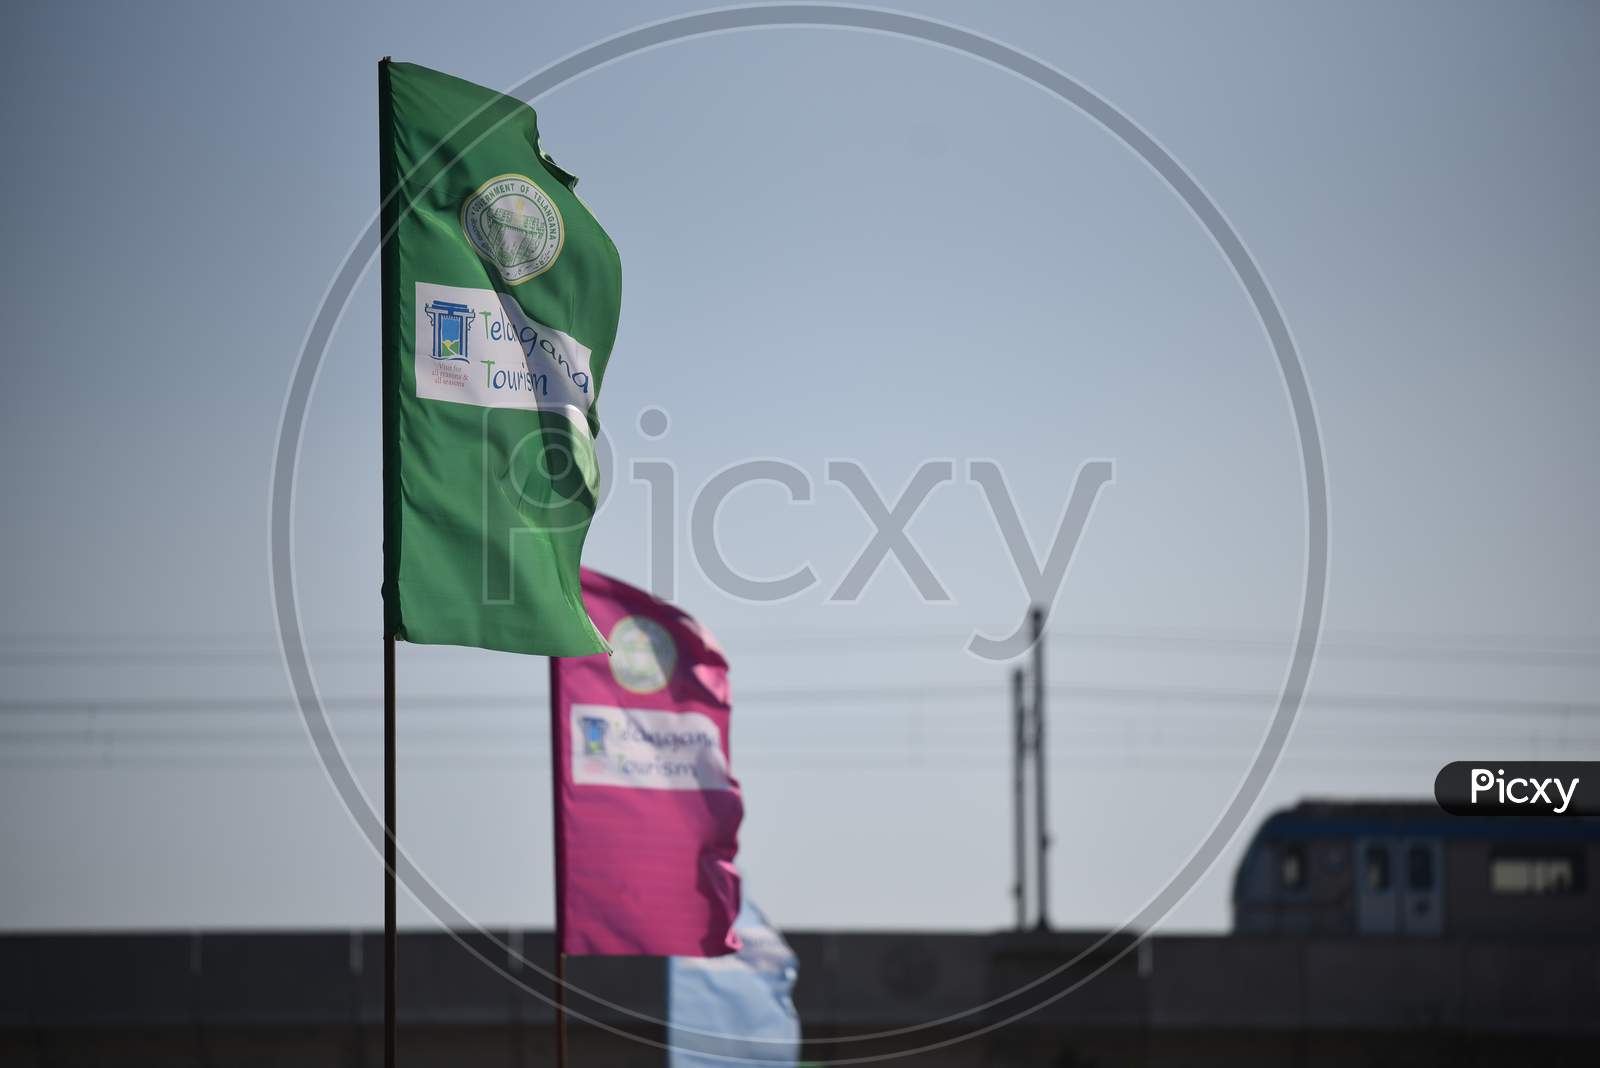 Telangana Tourism Flag and Hyderabad Metro Rail ,International Kite Festival 2020, Parade Grounds,Hyderabad